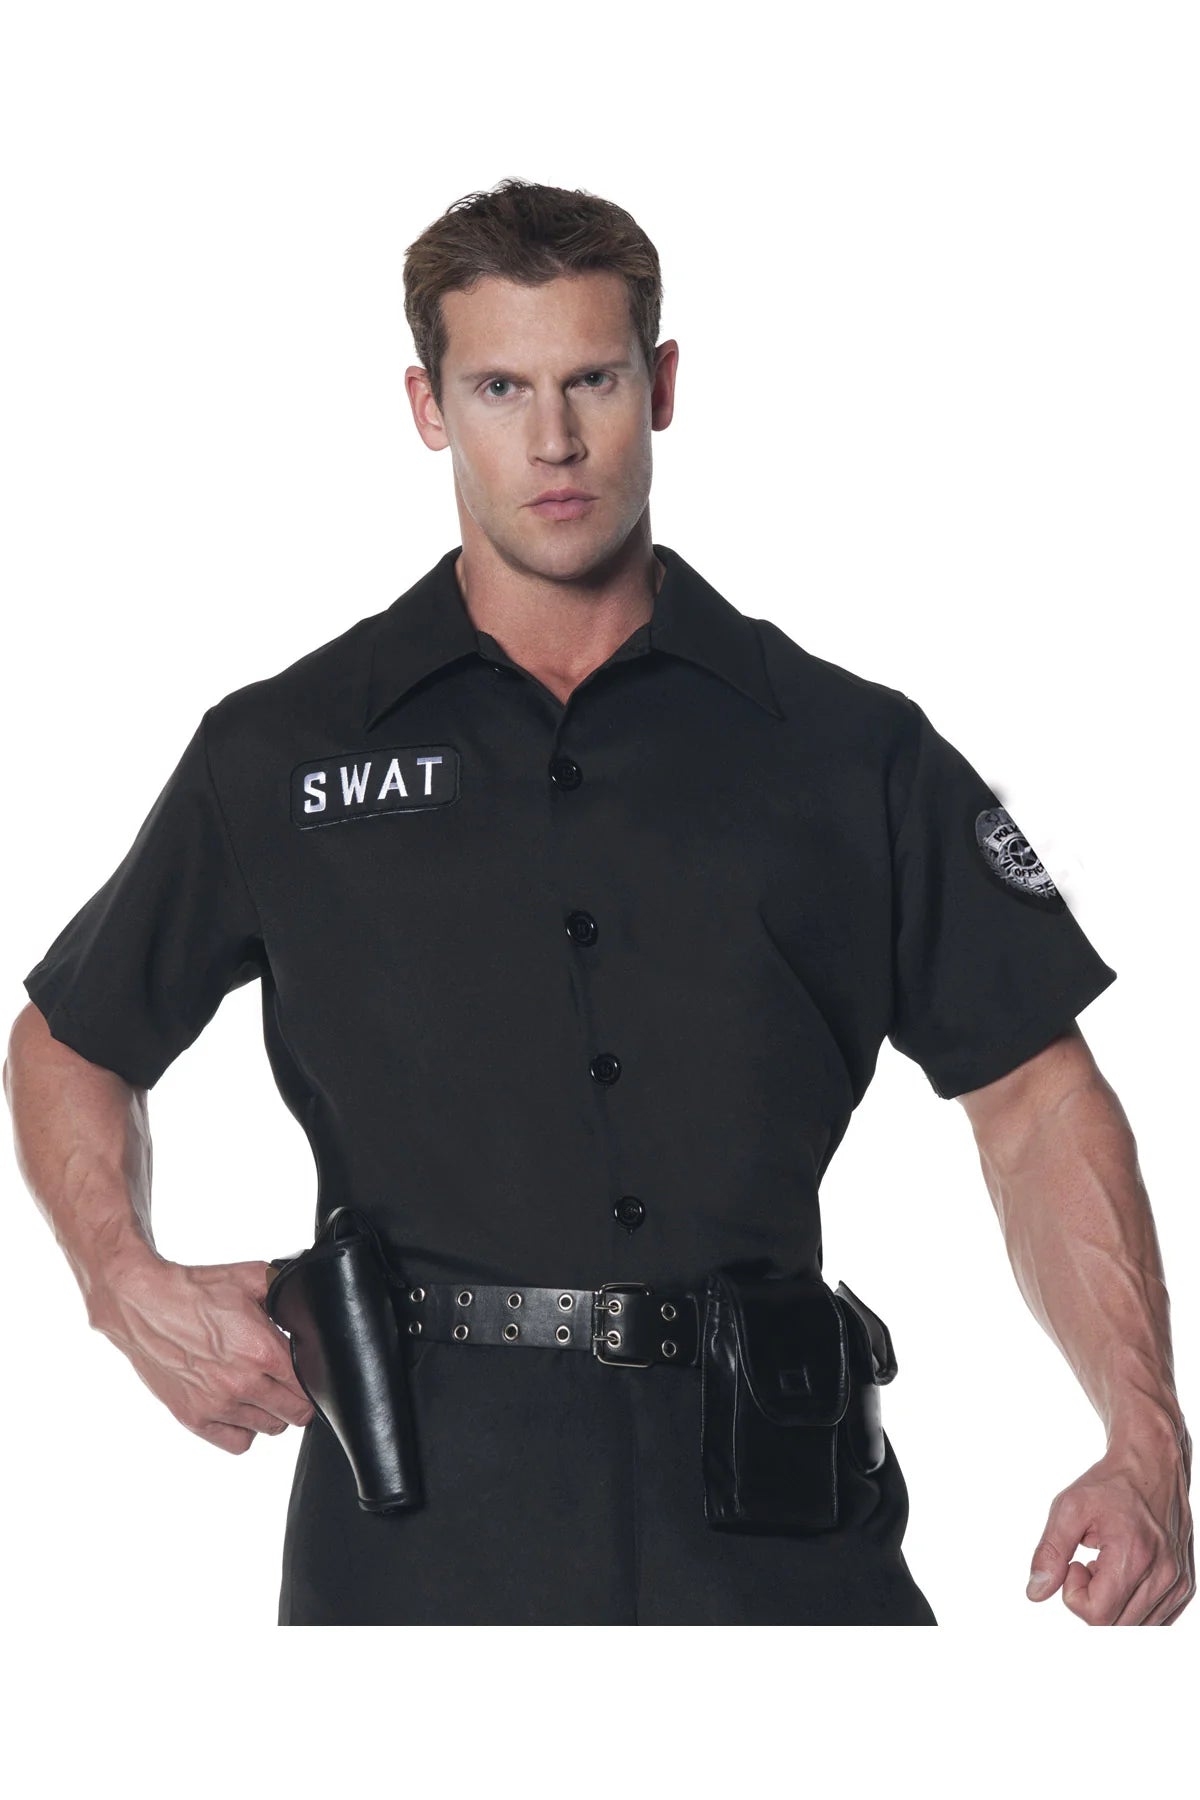 Adult SWAT Shirt